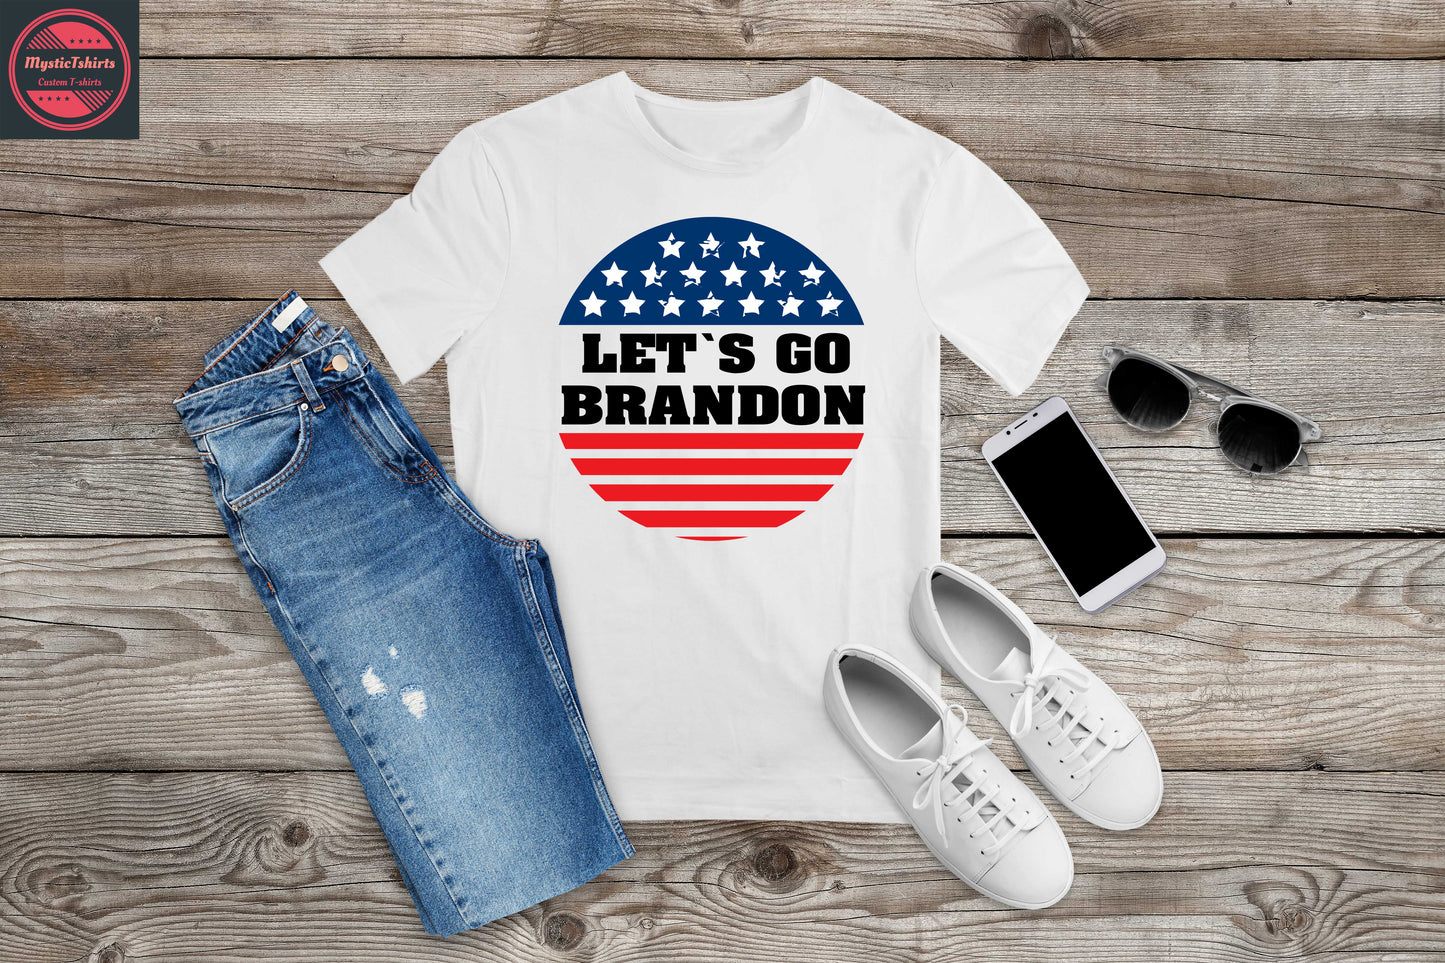 277. LET'S GO BRANDON, Custom Made Shirt, Personalized T-Shirt, Custom Text, Make Your Own Shirt, Custom Tee